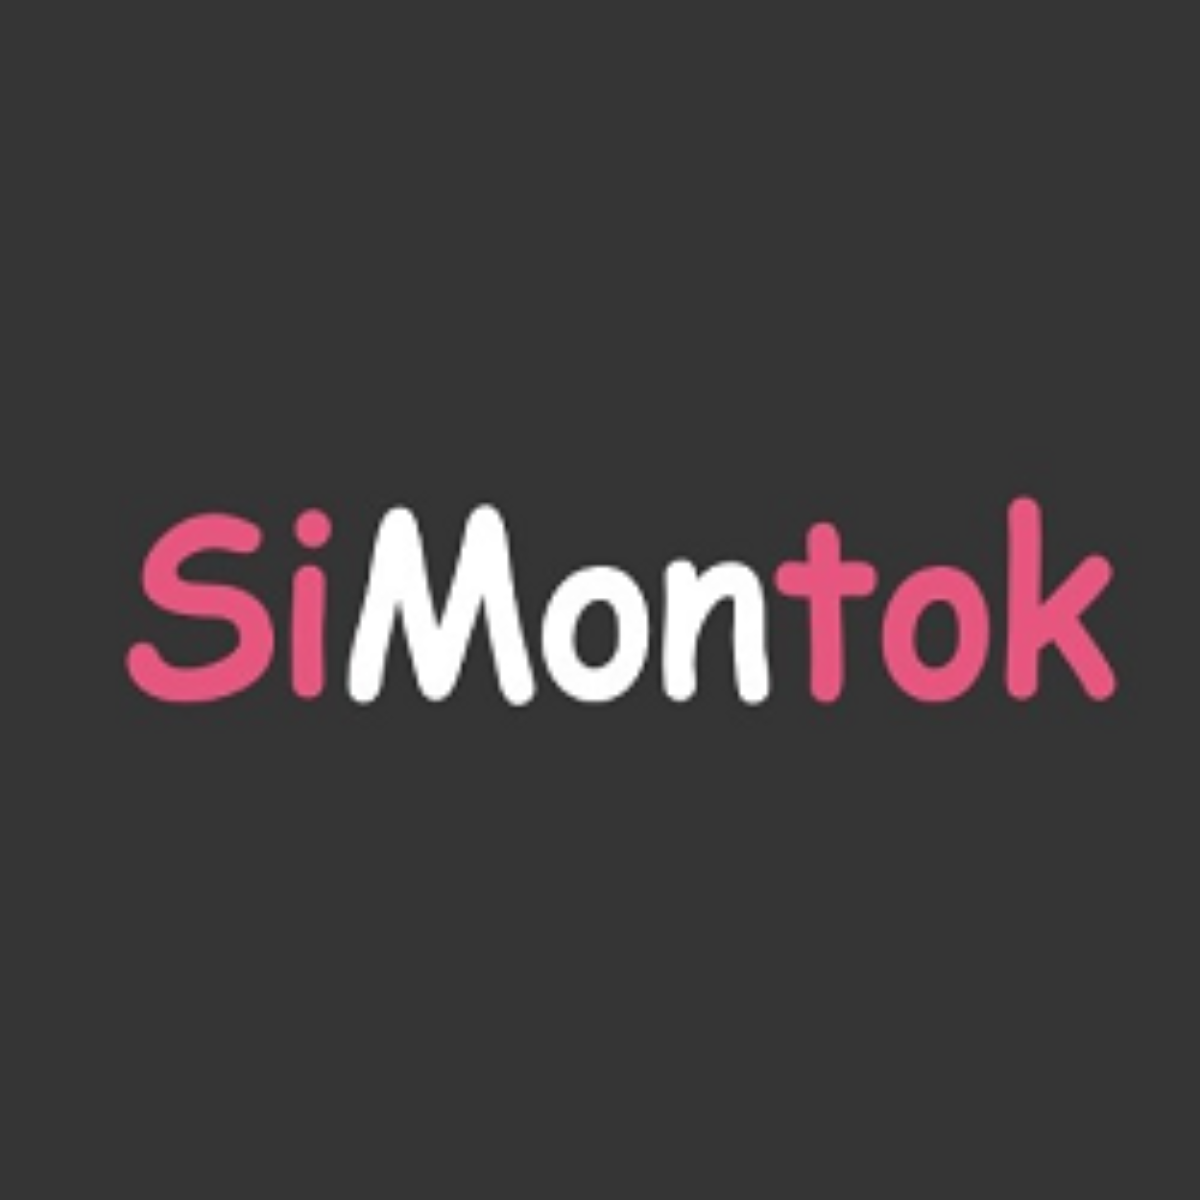 Simontox App 2020 Apk Download Latest Version 2.0 Tanpa Vpn - Simontok Pro Mod Terbaru 2020 Il ...